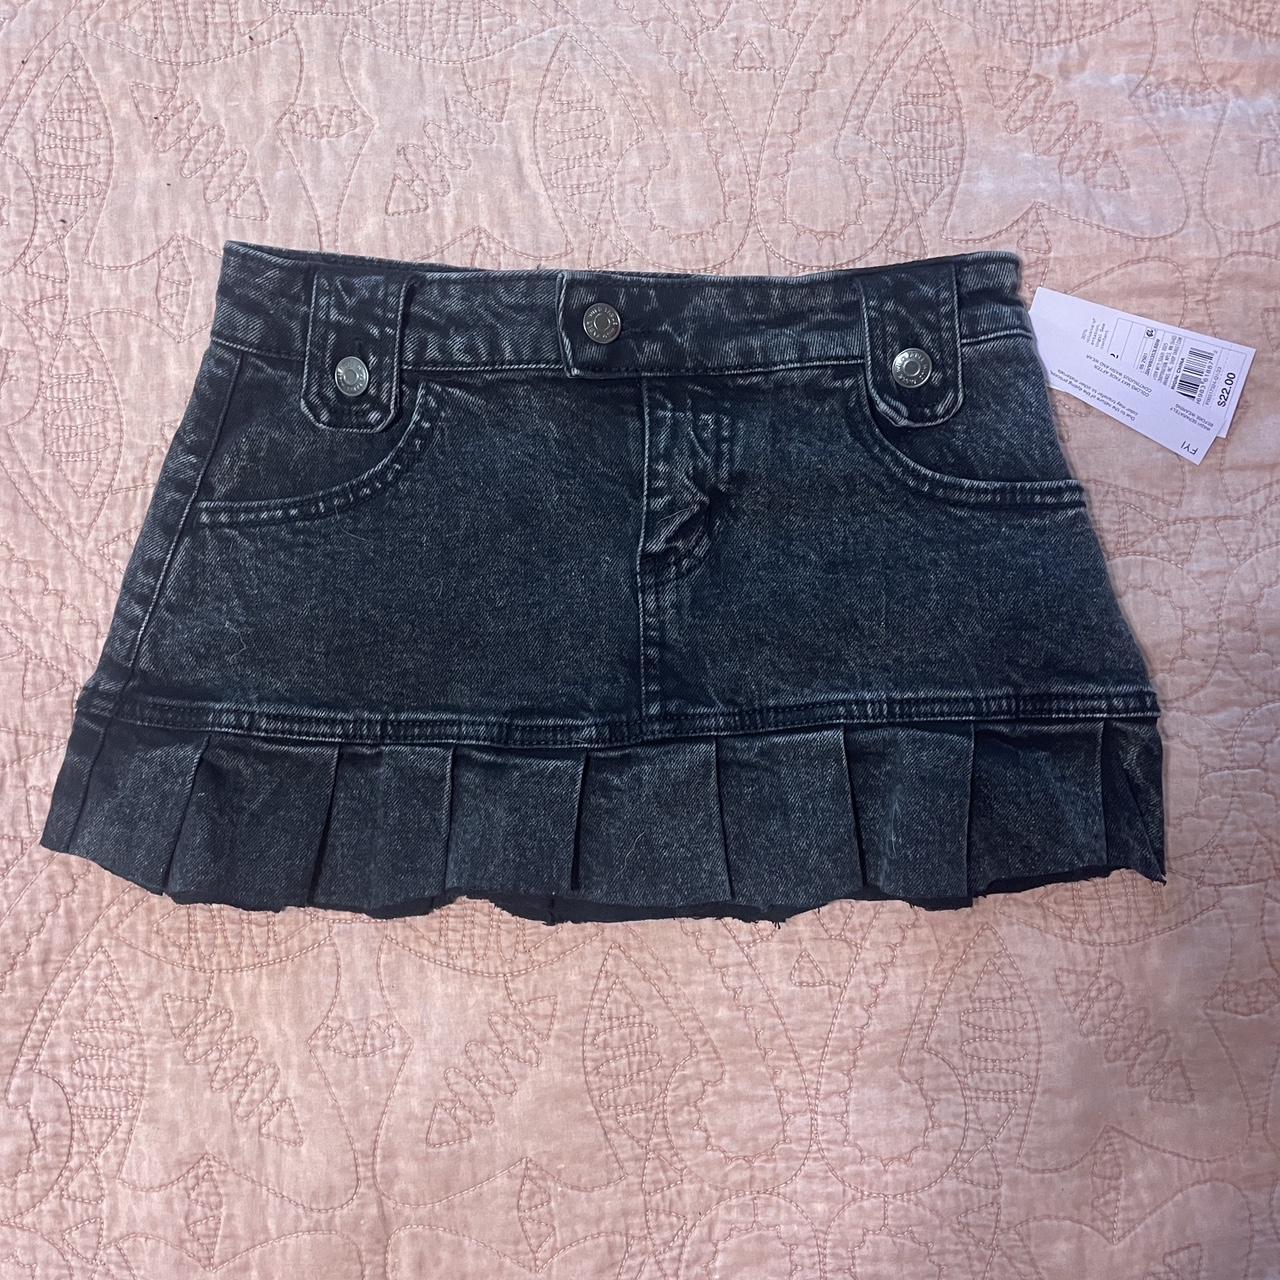 Black jean mini skirt - Depop